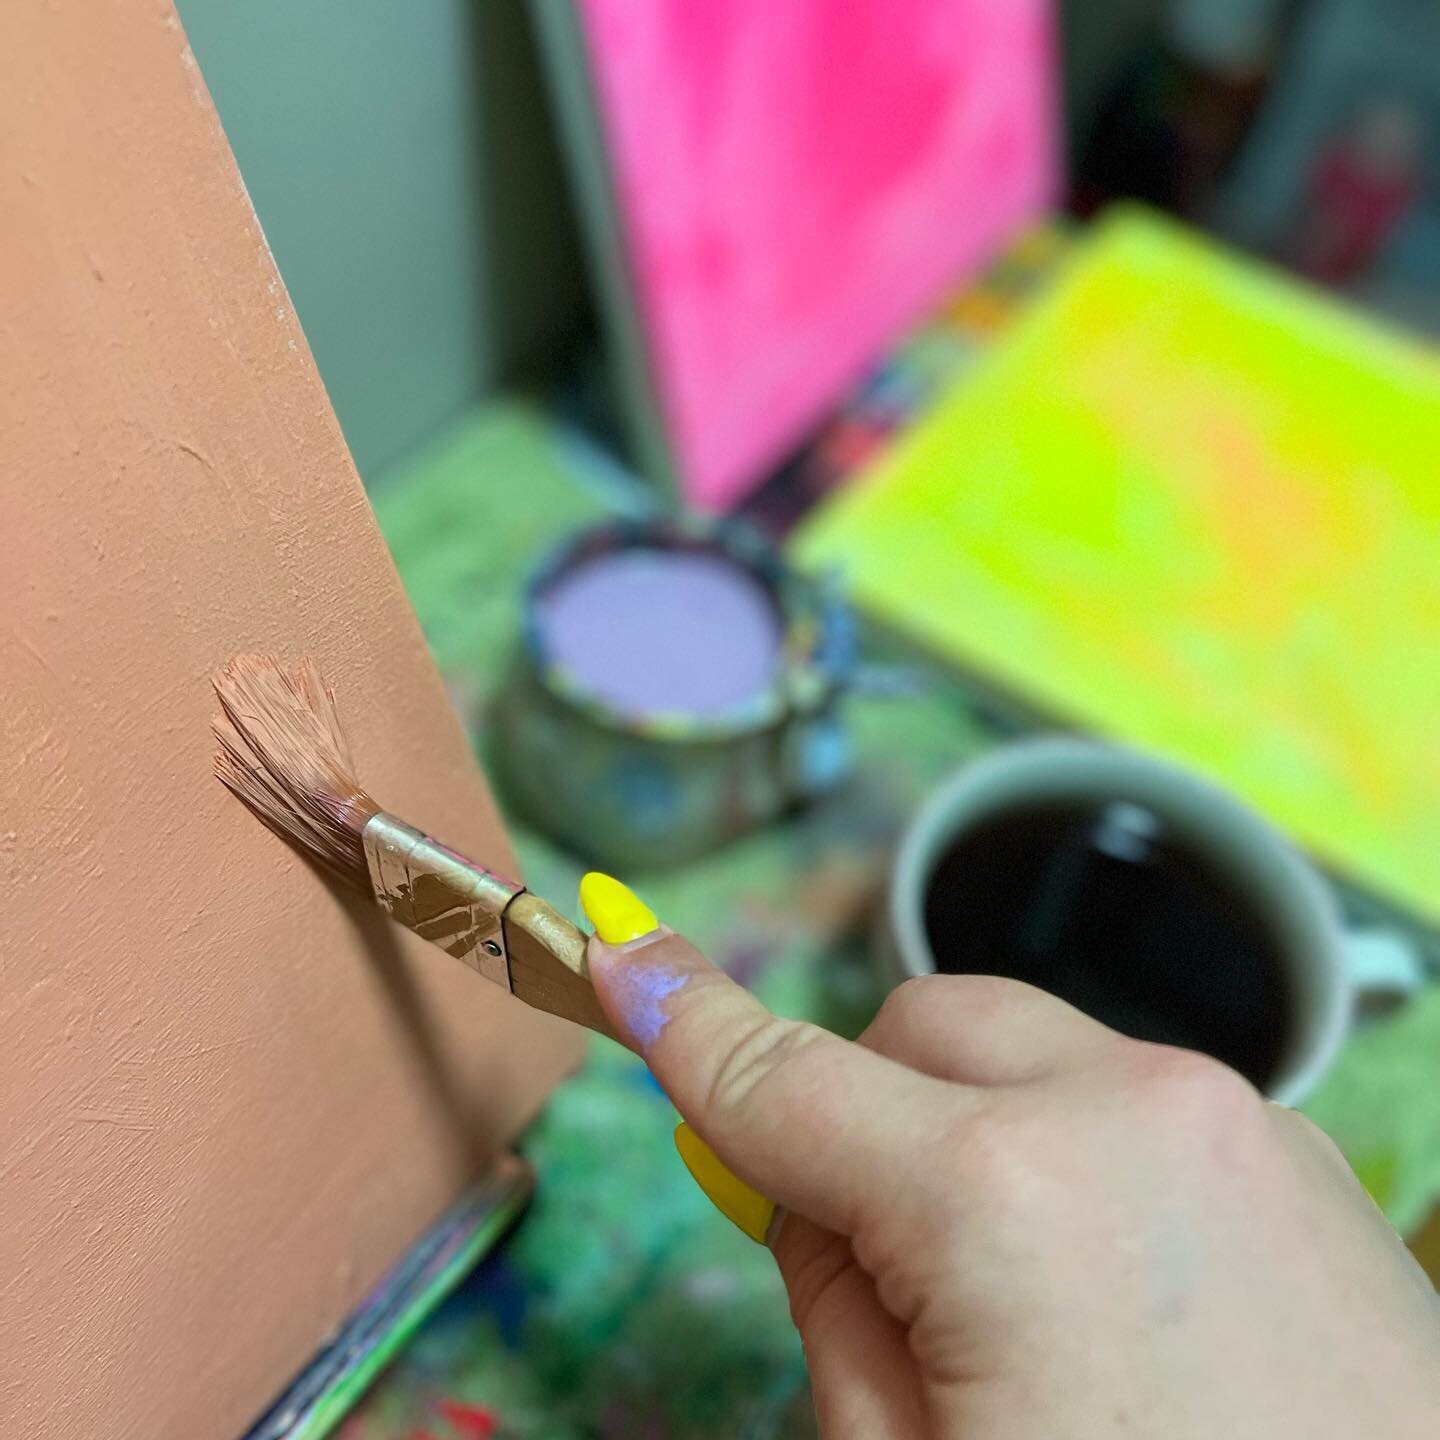 Hazelnut coffee and canvas prep! Feels good to get paint on my hands again. 

#dontmixthecupsup #dontdrinkthepaintwater #yyjart #yyjarts #artist #neonpaint #artistlife